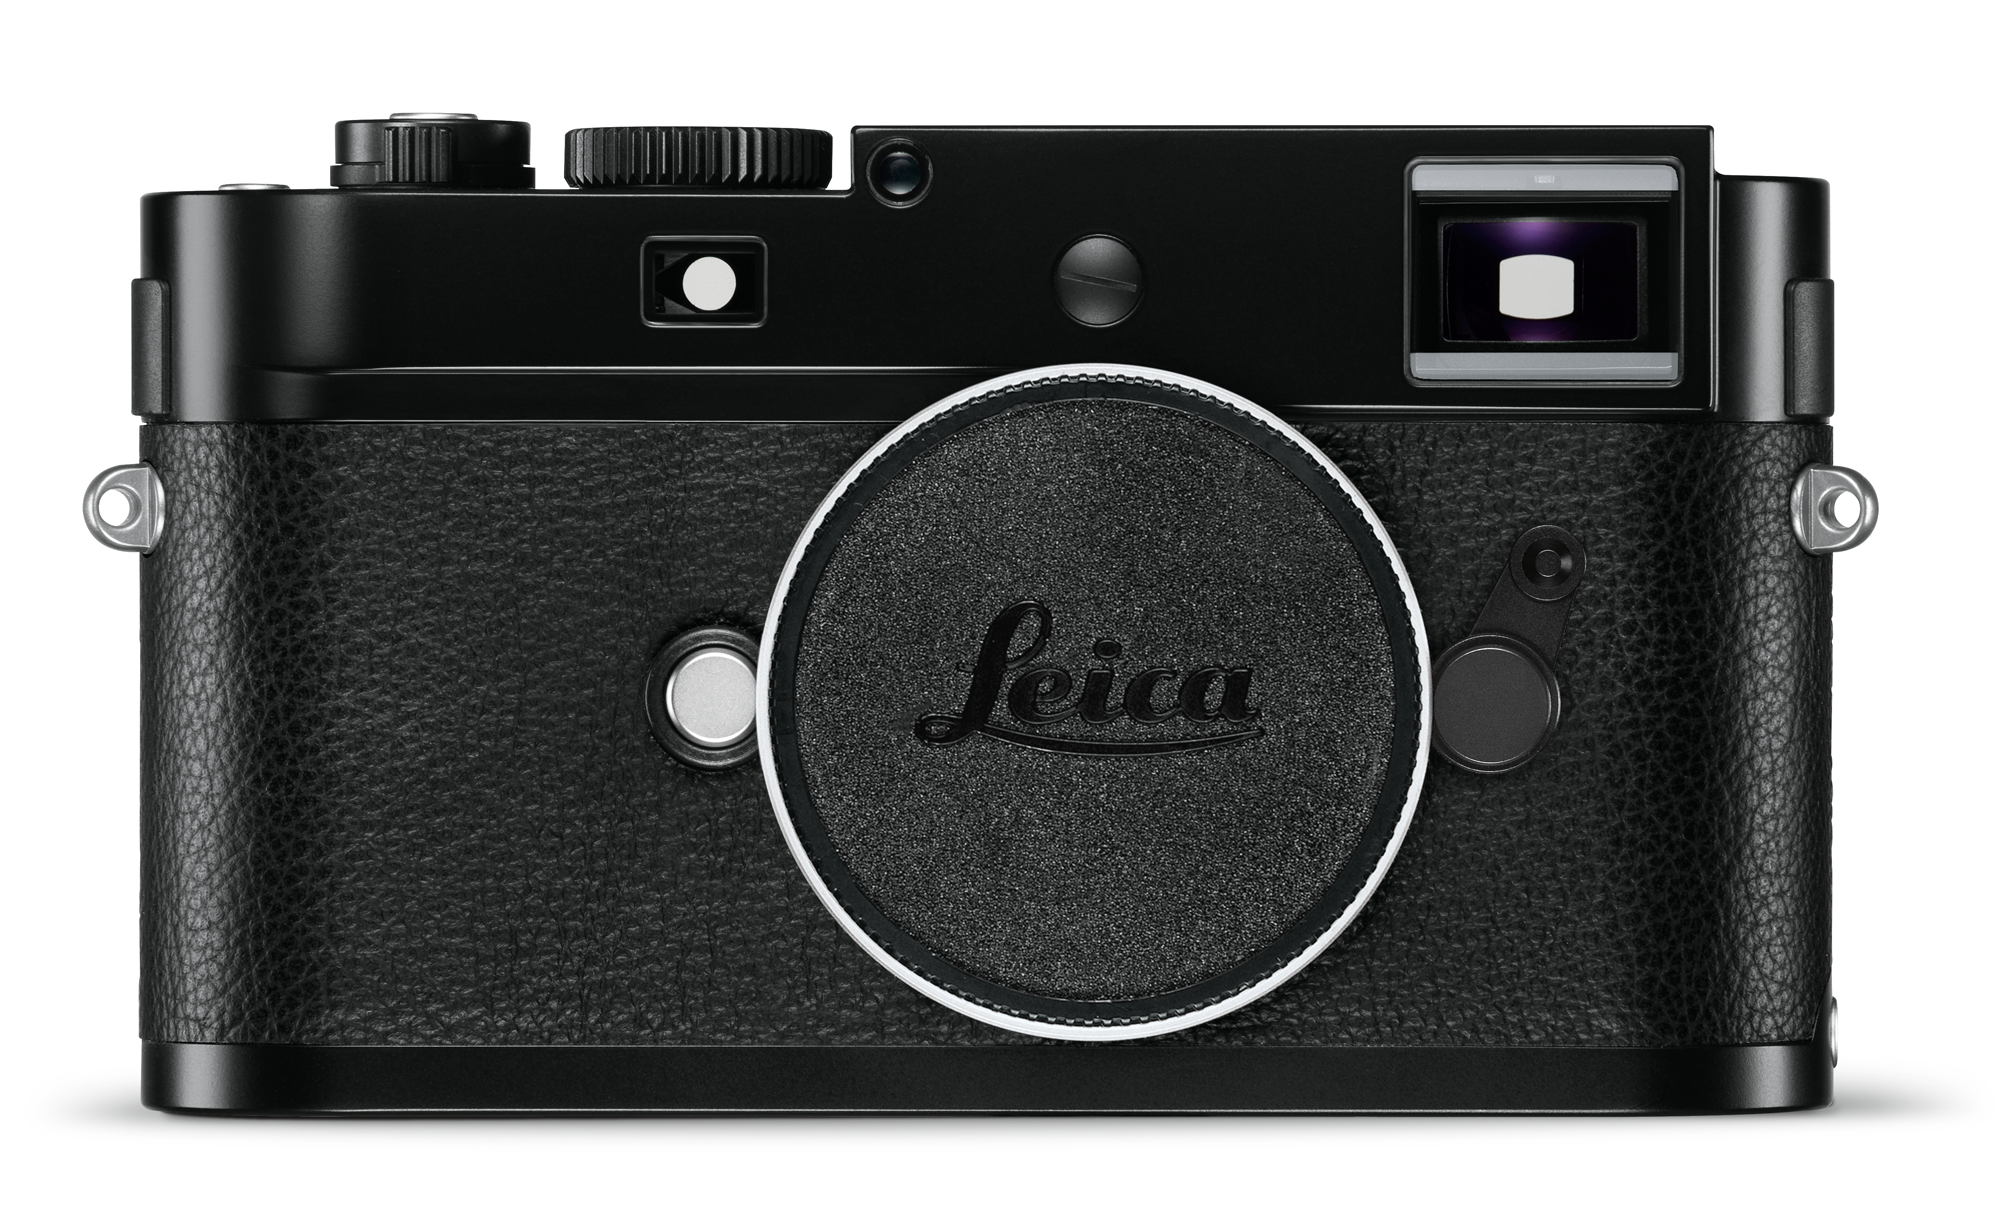 Leica M-D (Typ 262) | Leica Camera US